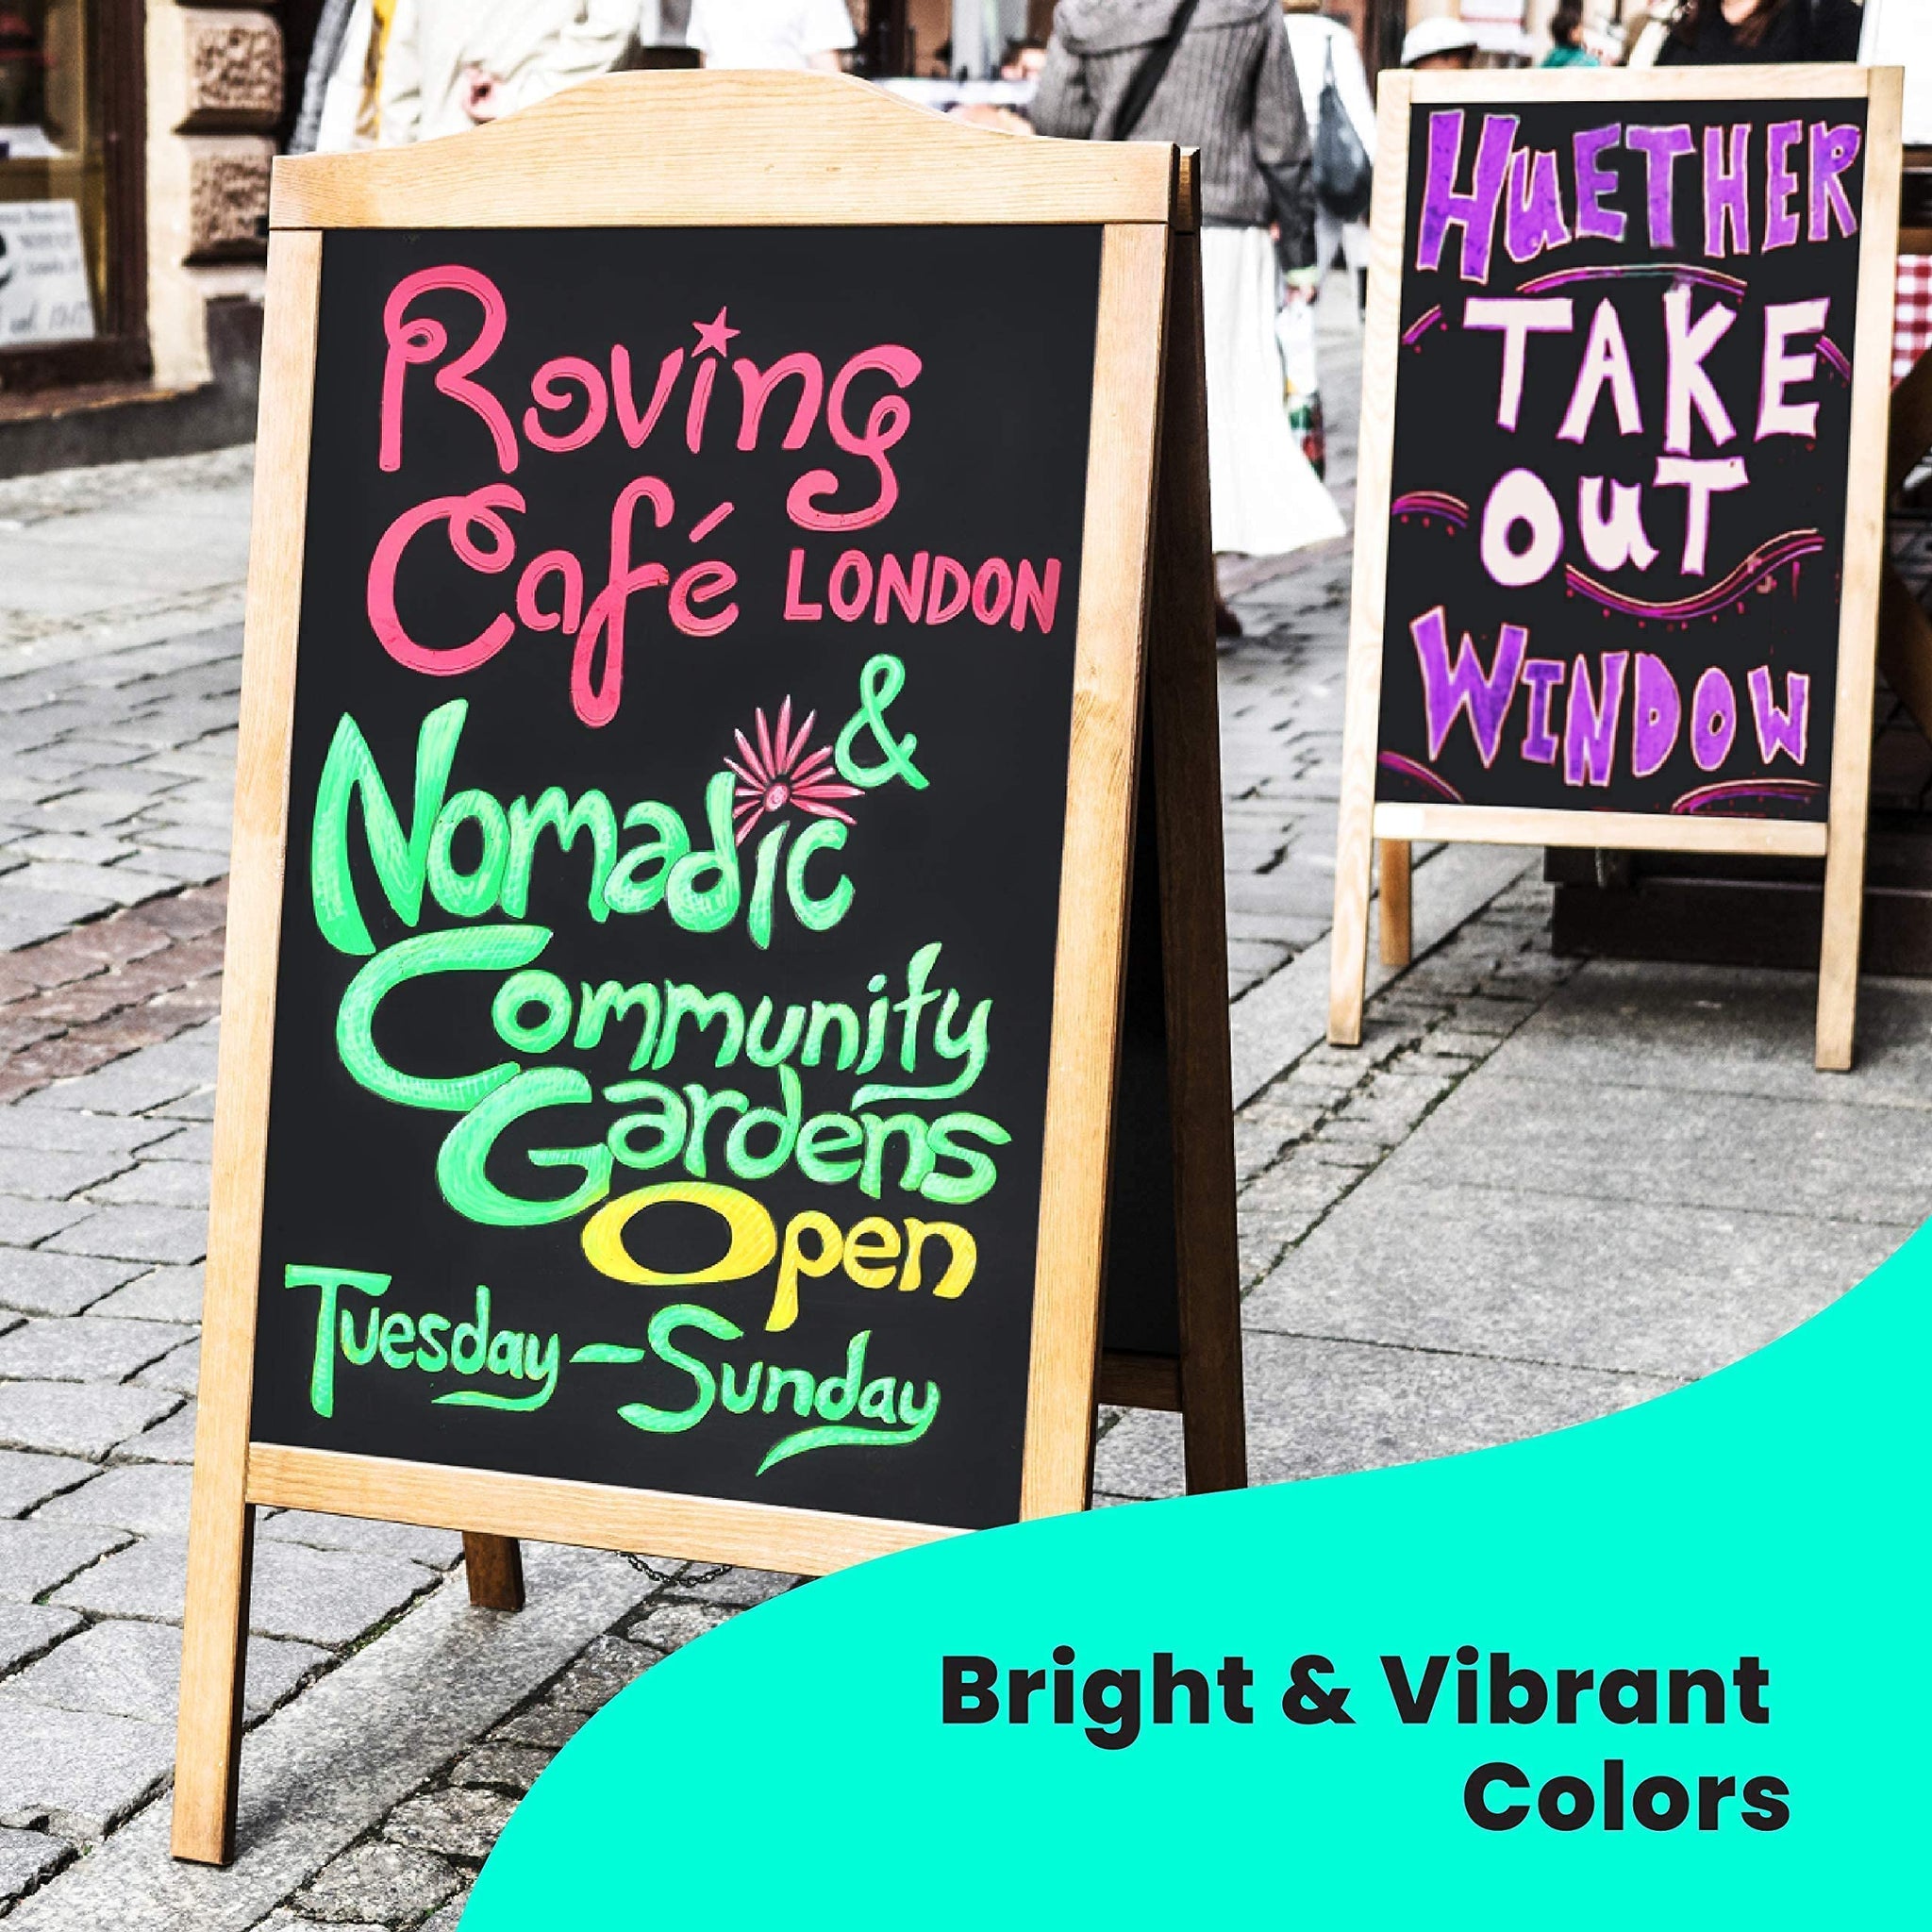 ARTISTRO 8 Colored Jumbo Chalk Markers - 15mm Neon Erasable Window Mar –  WoodArtSupply